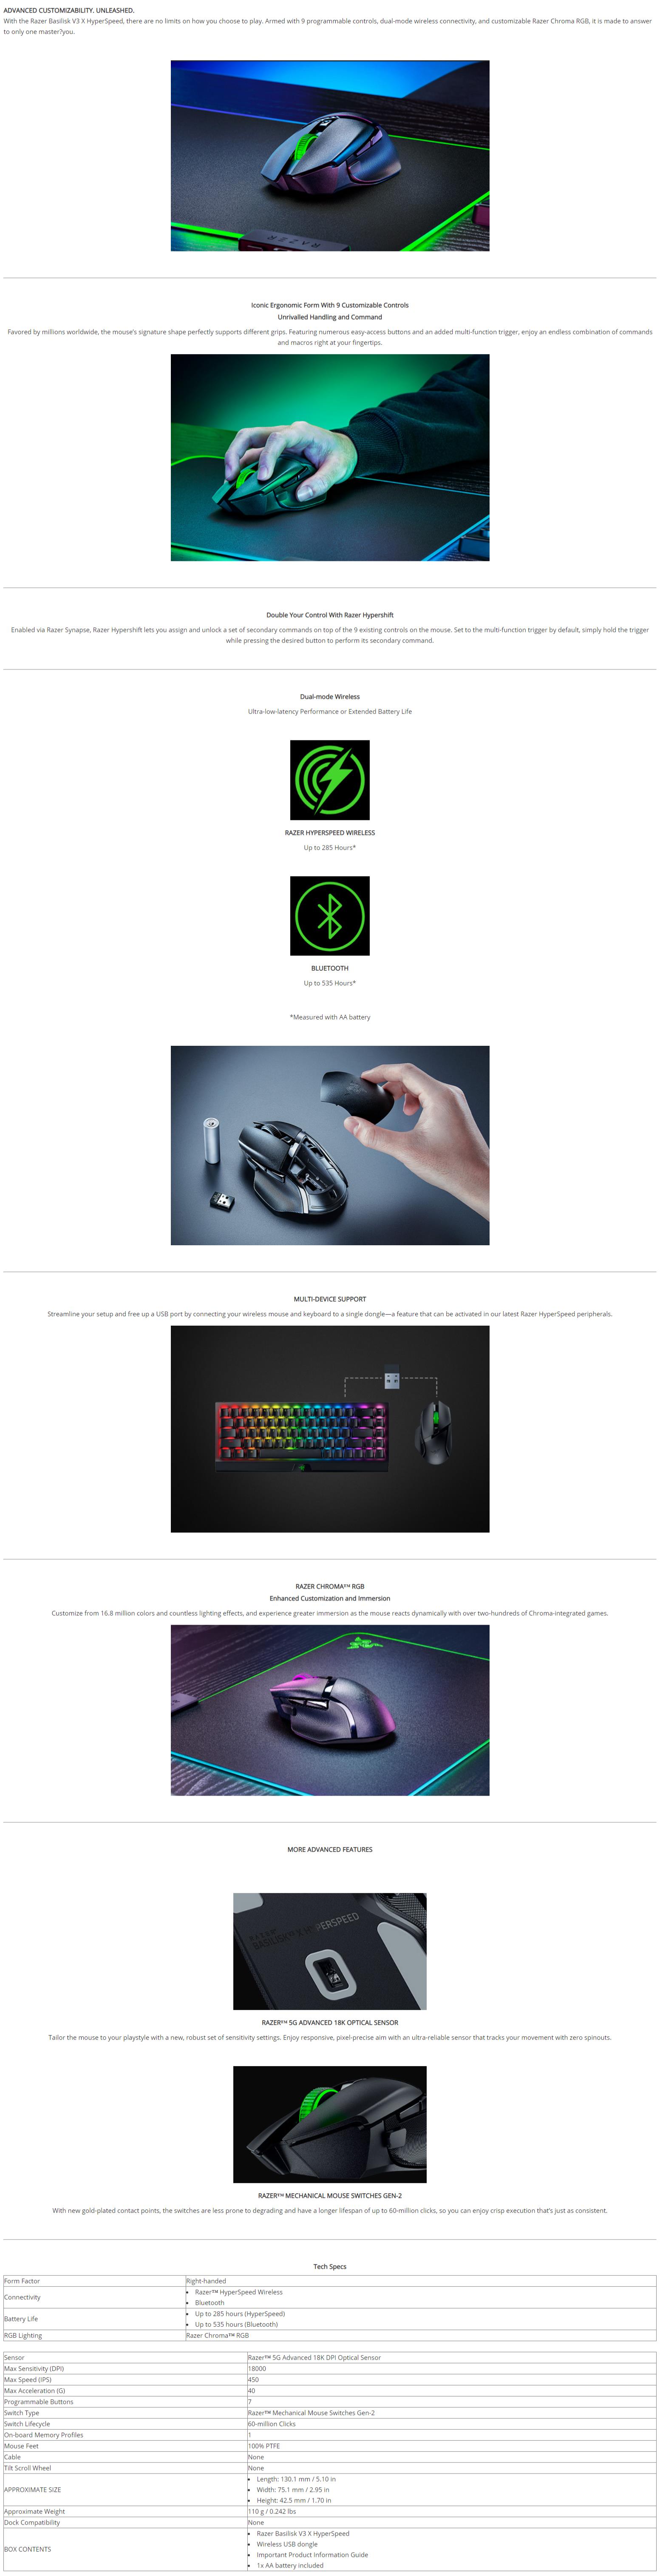 A large marketing image providing additional information about the product Razer Basilisk V3 X HyperSpeed - Ergonomic RGB Wireless Gaming Mouse - Additional alt info not provided